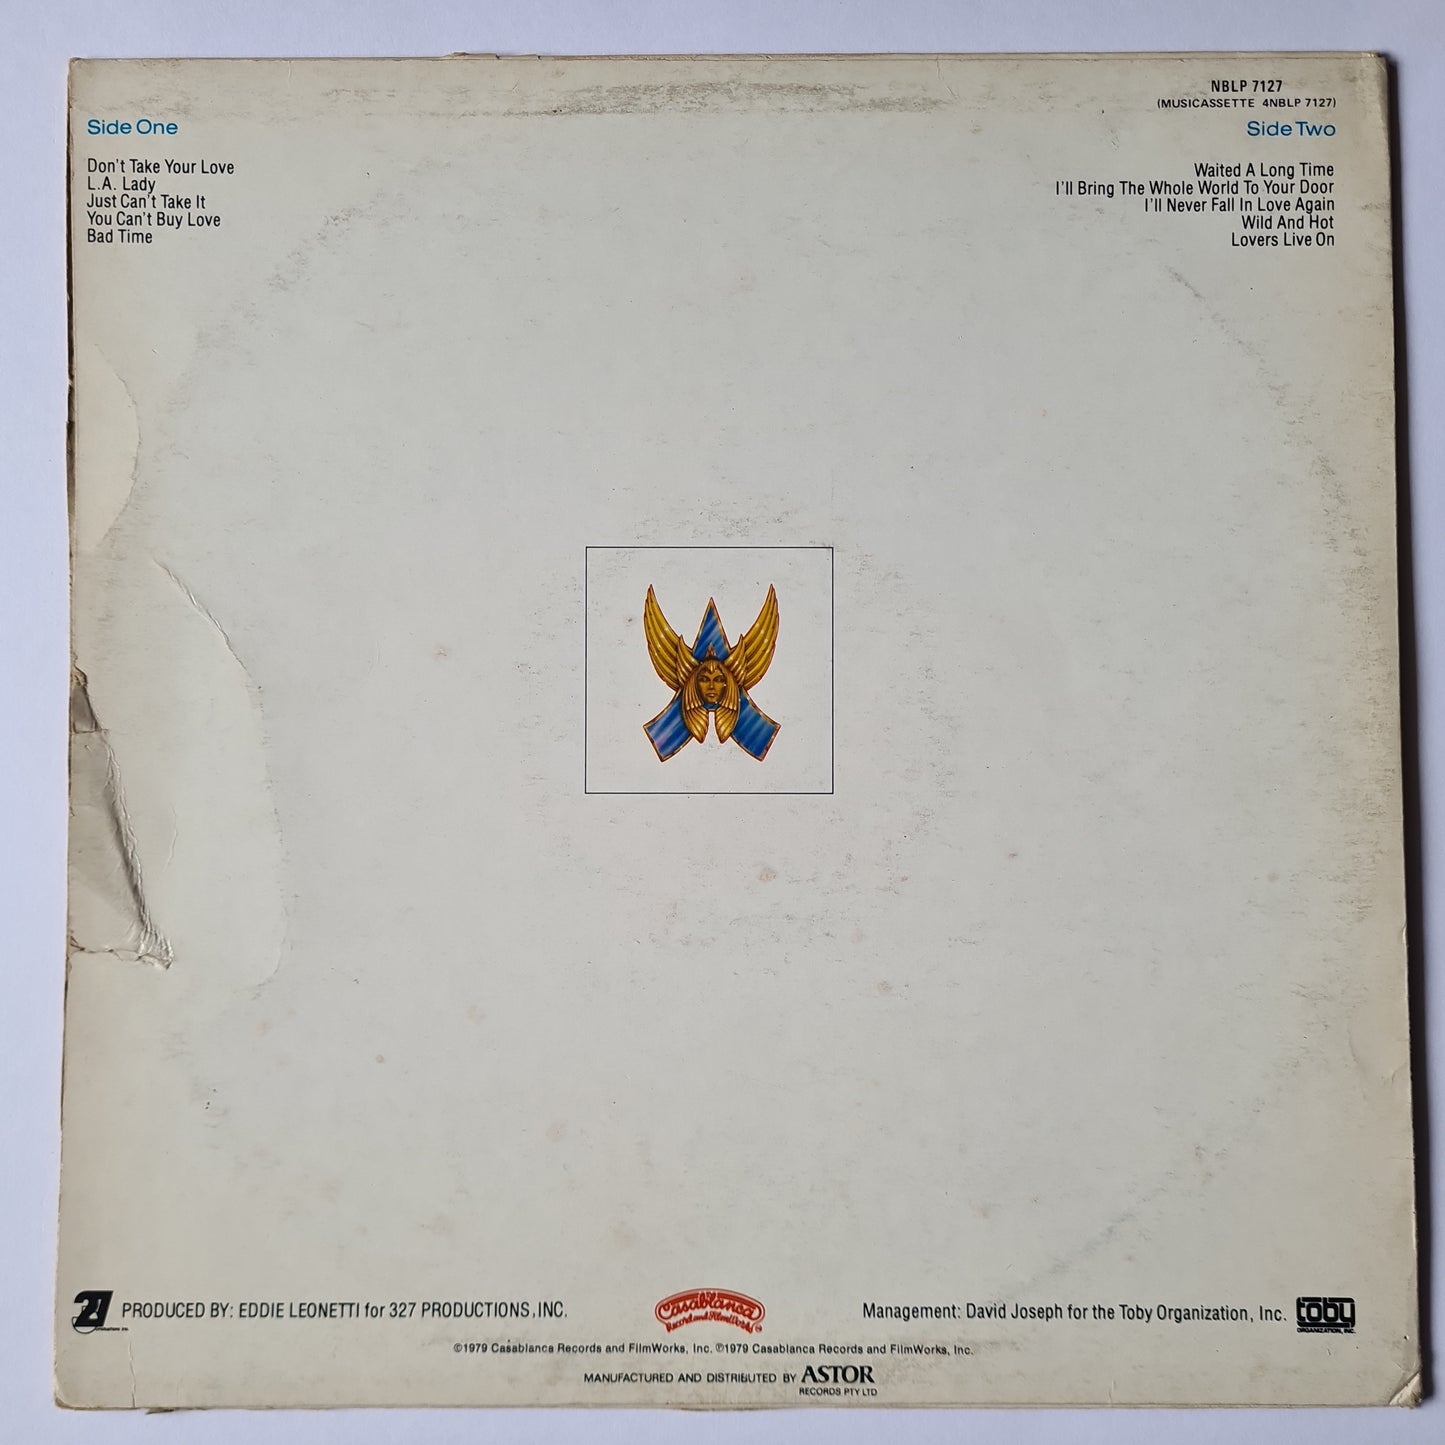 Angel – Sinfull - 1979 - Vinyl Record